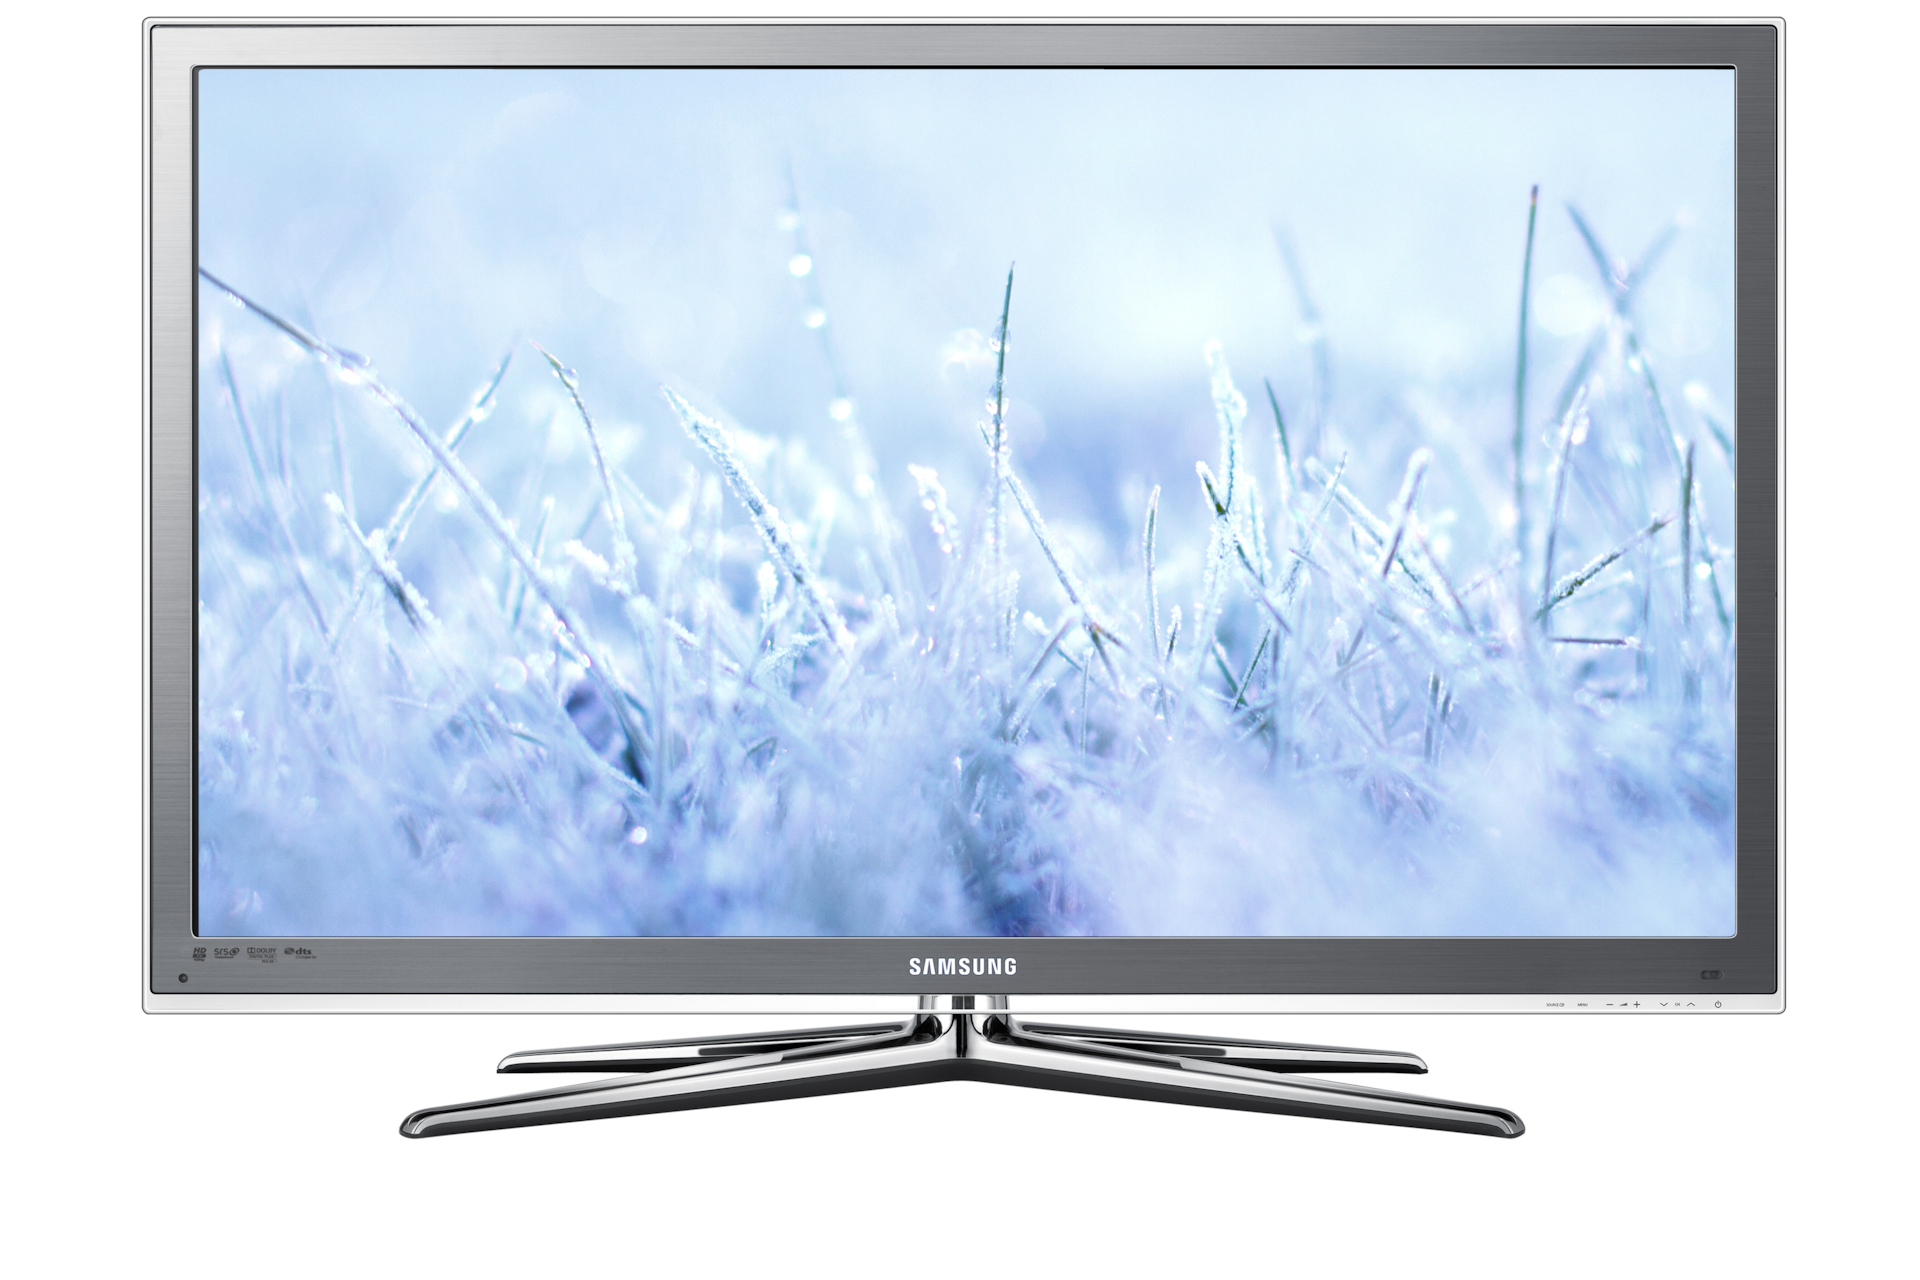 UE46C8700 3D LED-TV 46" Samsung Service NL